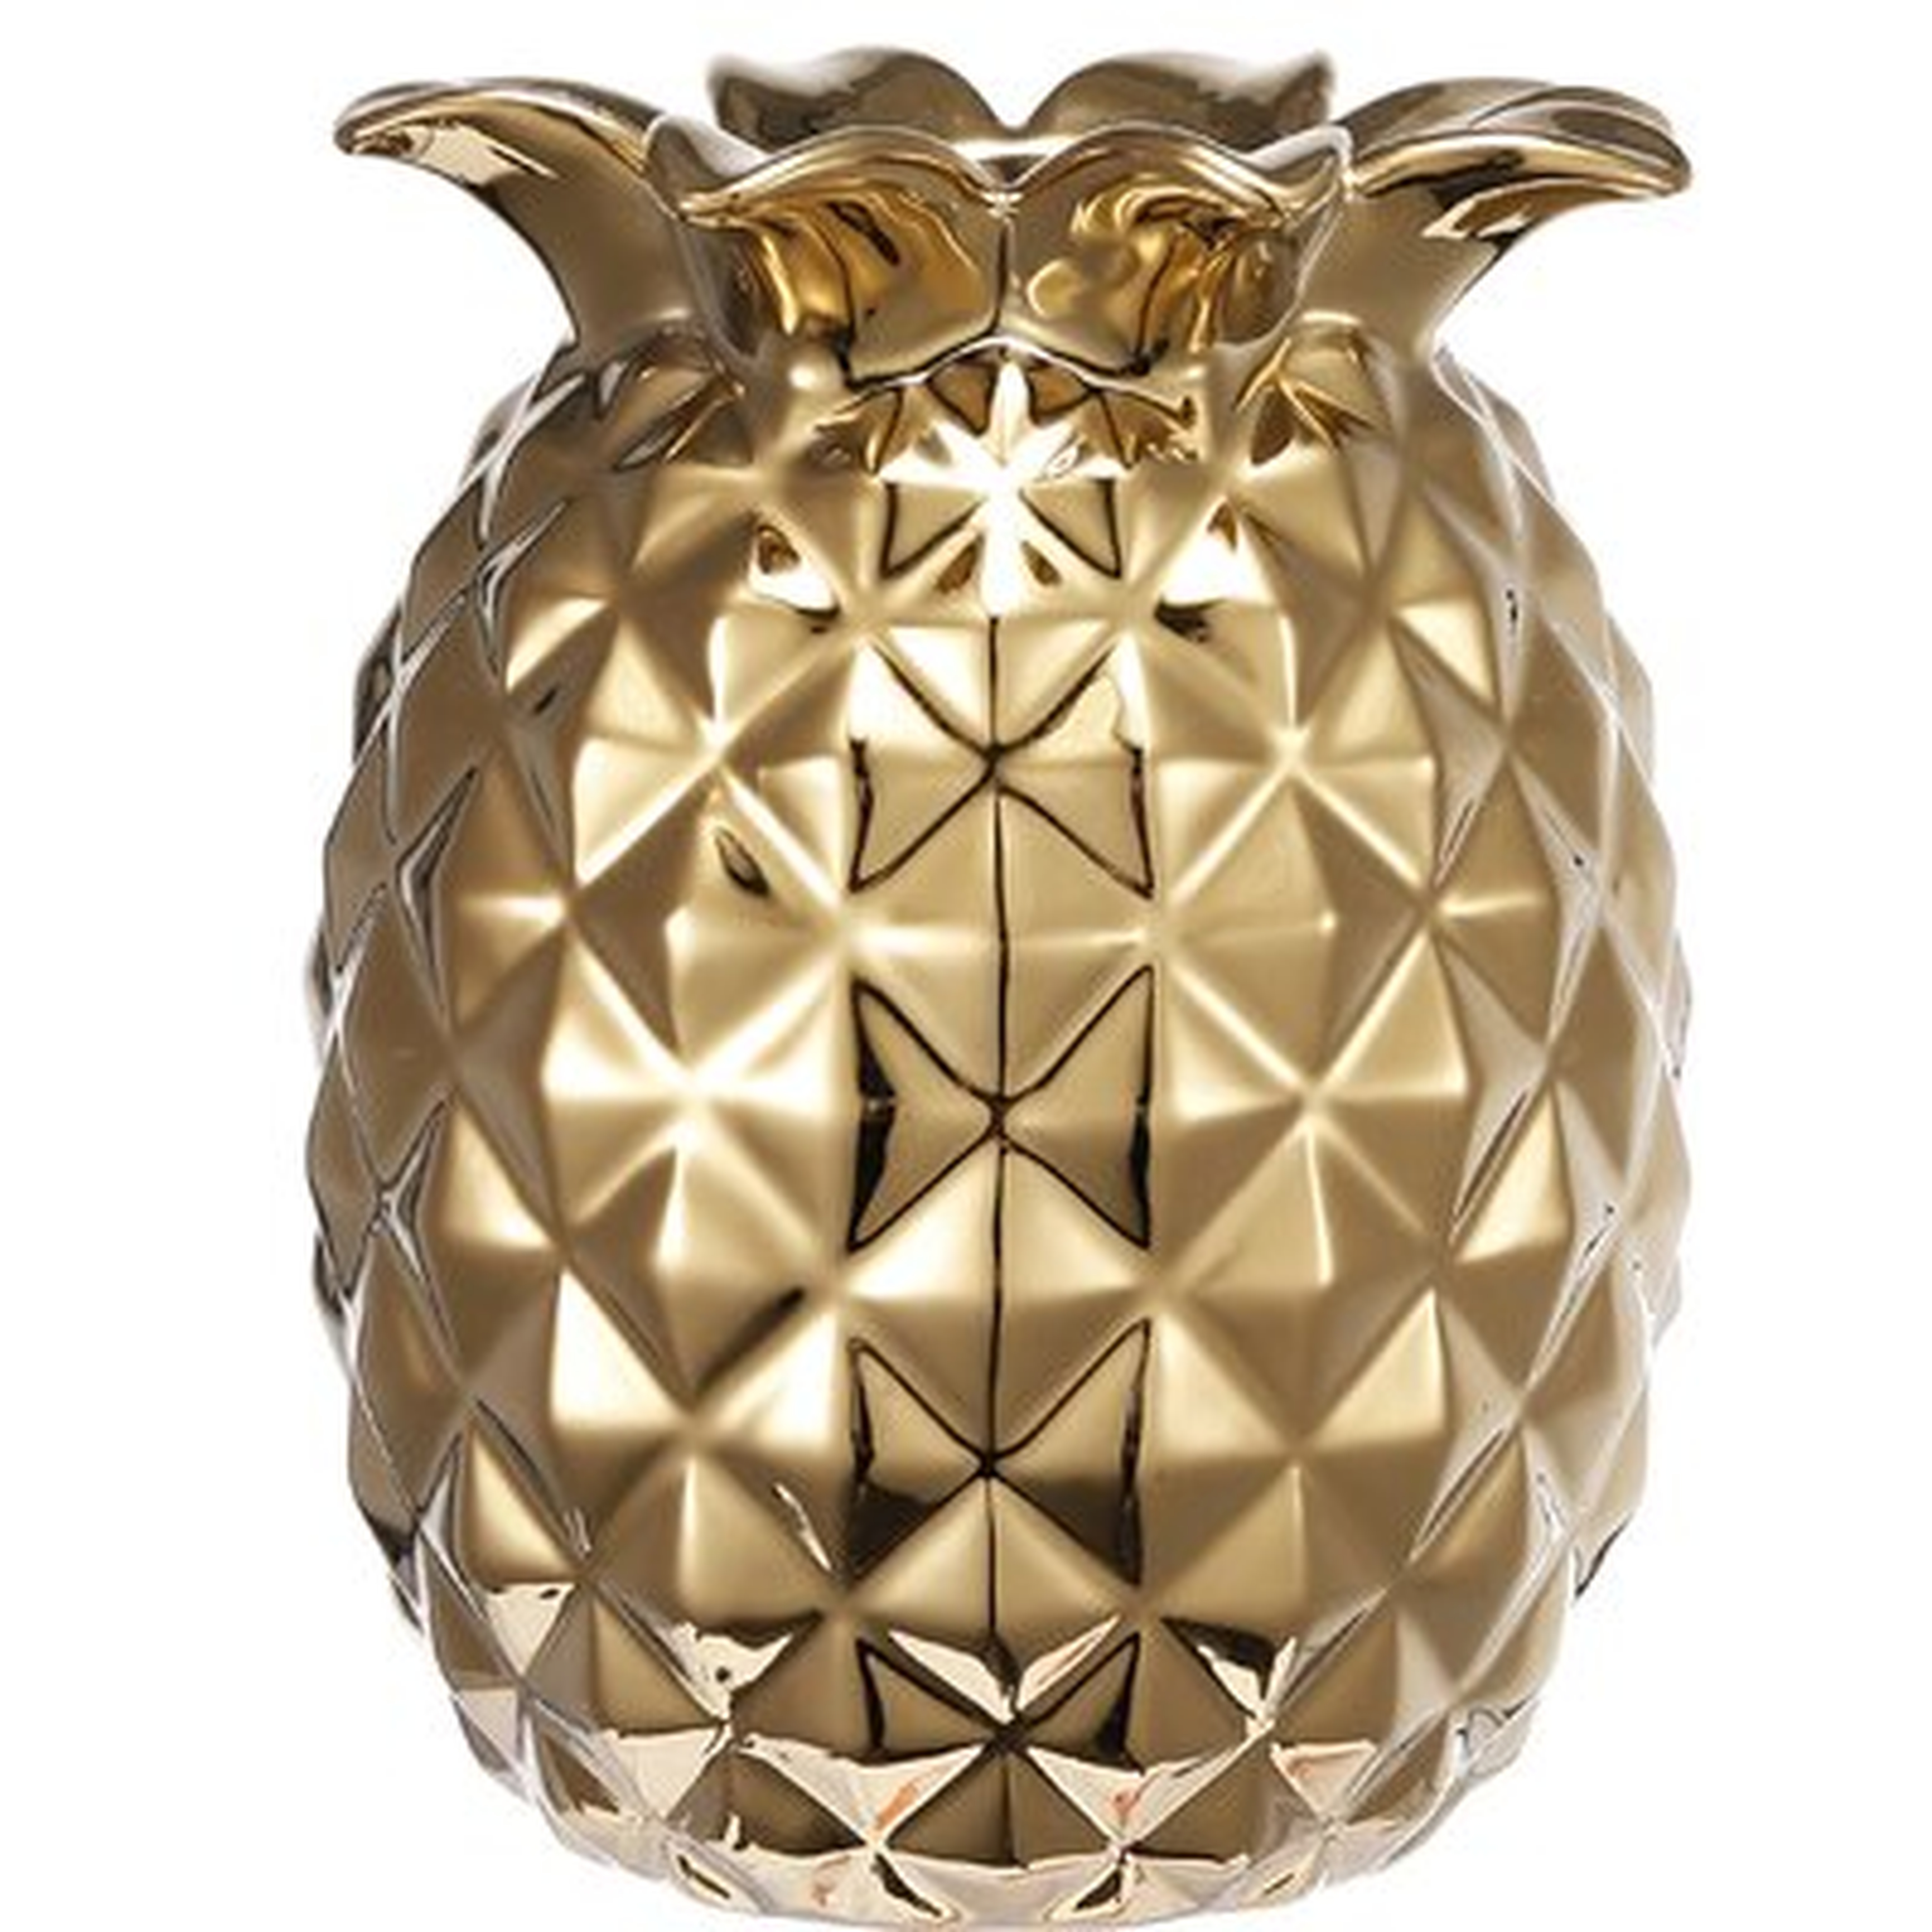 Teter Pineapple Table Vase - Wayfair